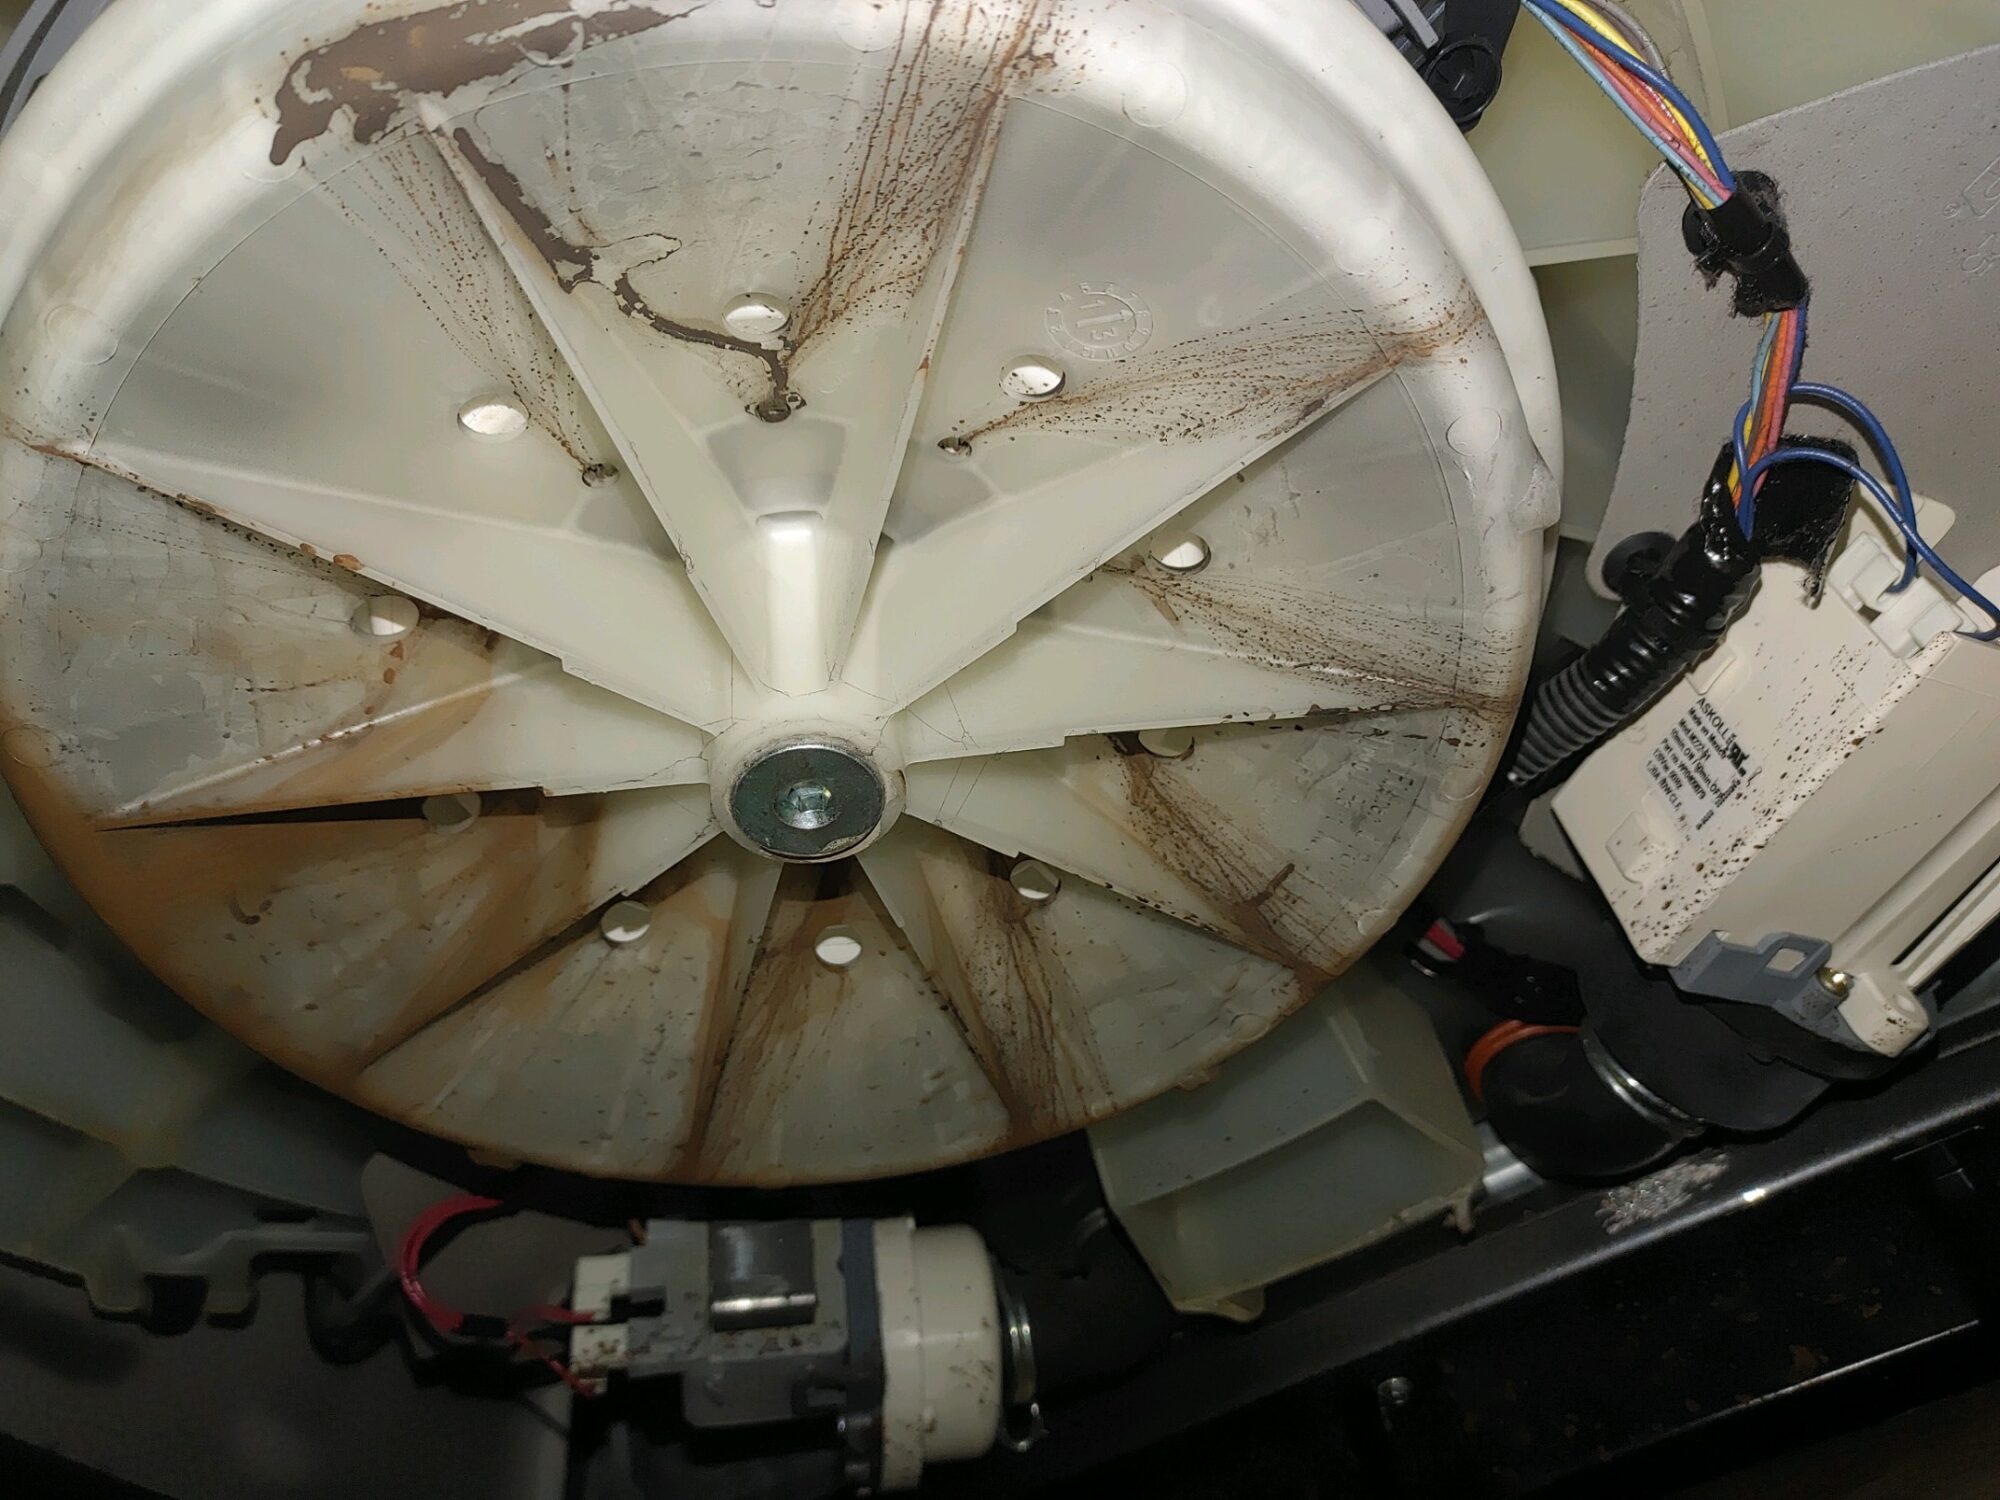 appliance repair washing machine repair cabrio washer leaking through tub seal stadler st lady lake fl 32159